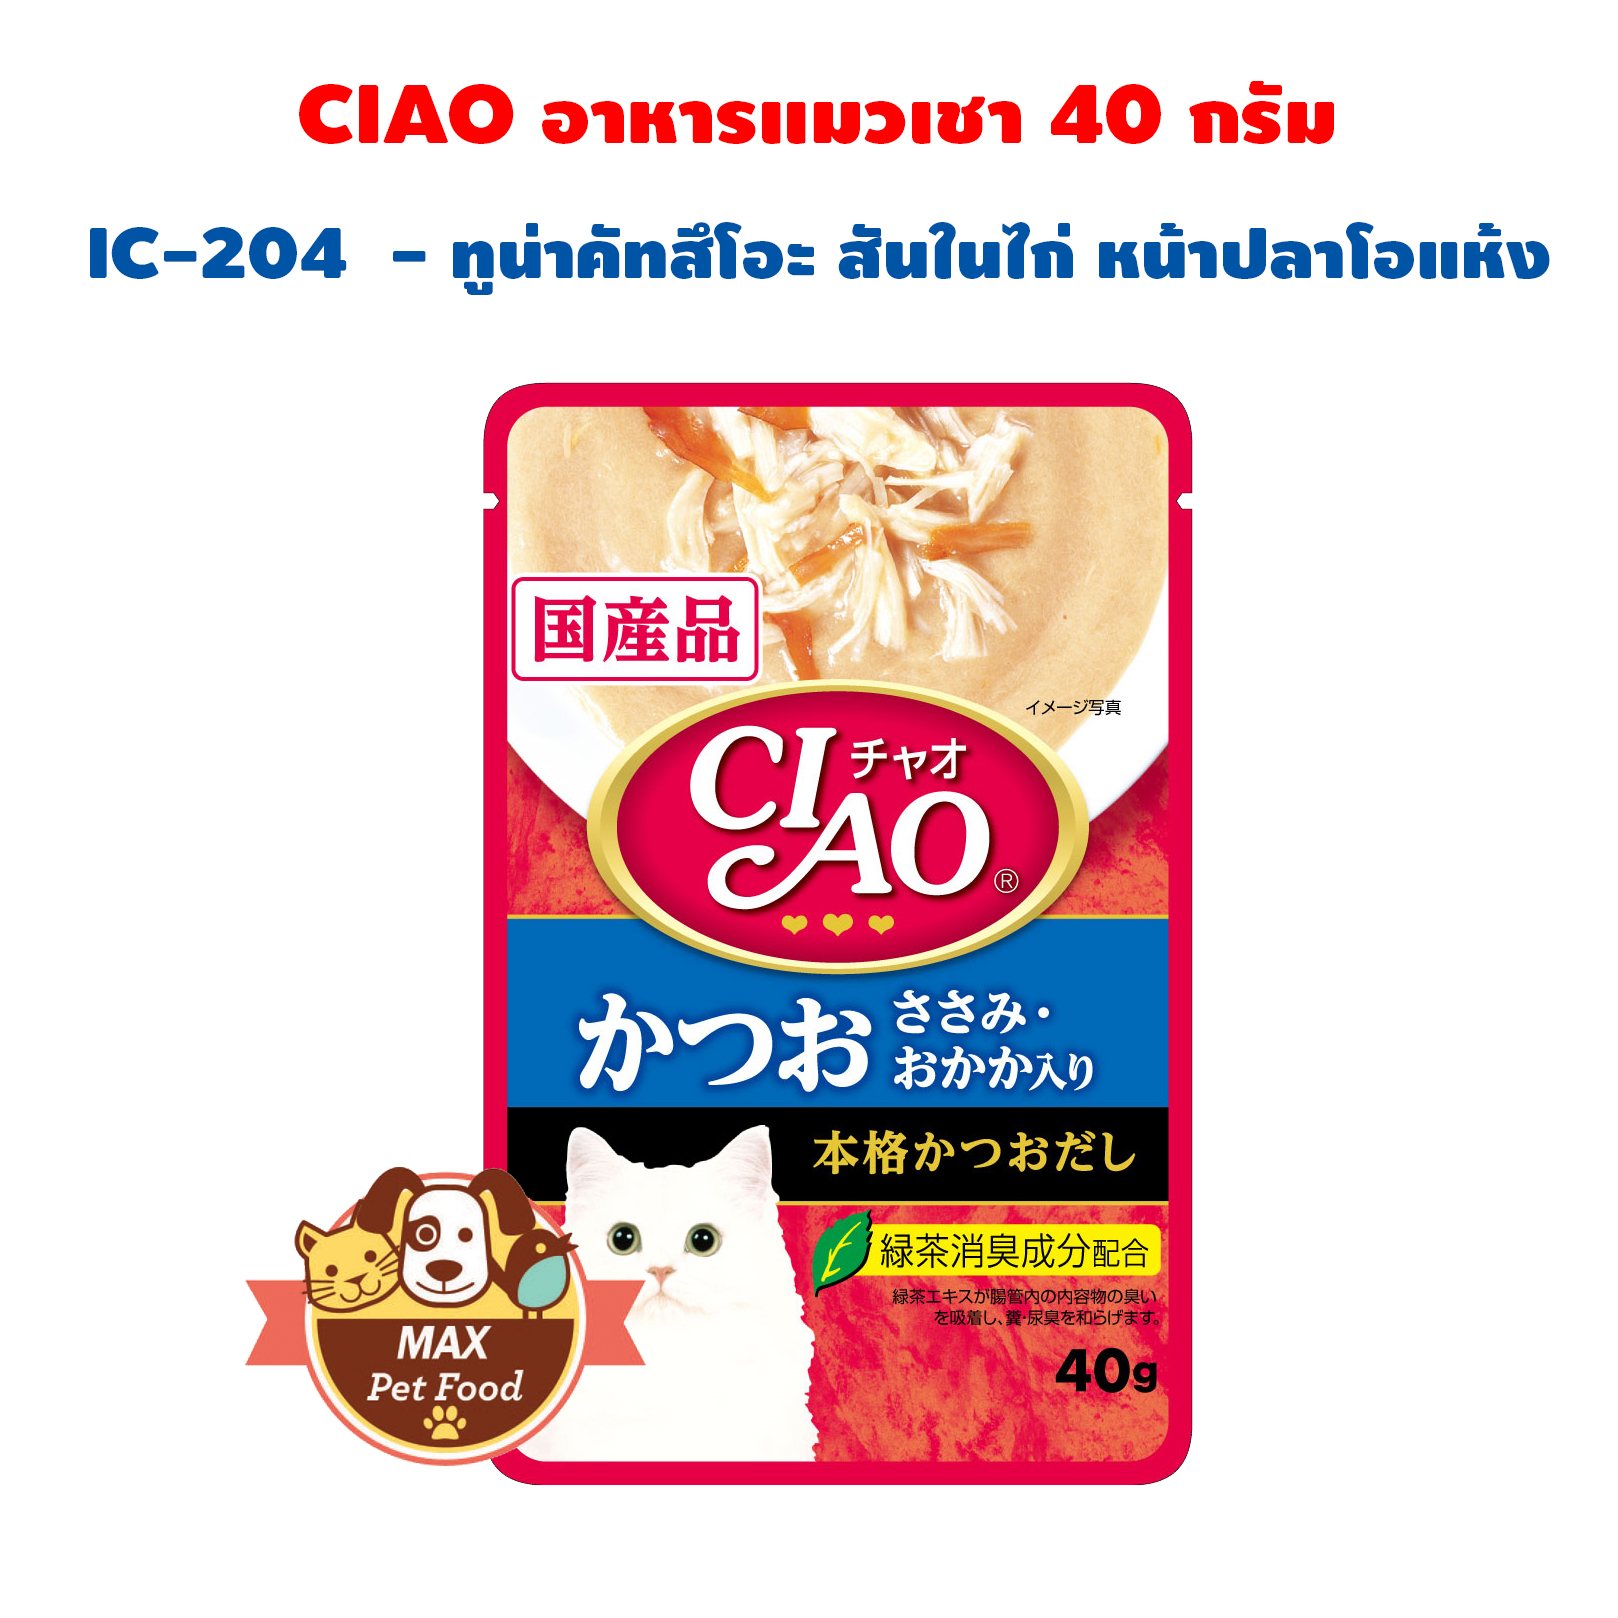 CIAO Pouch - อาหารเปียกสำหรับแมว ขนาด 40g. แฟลชเซล ราคาประหยัด ขออนุญาตเป็นสุ่มรส งดดราม่านะคะ